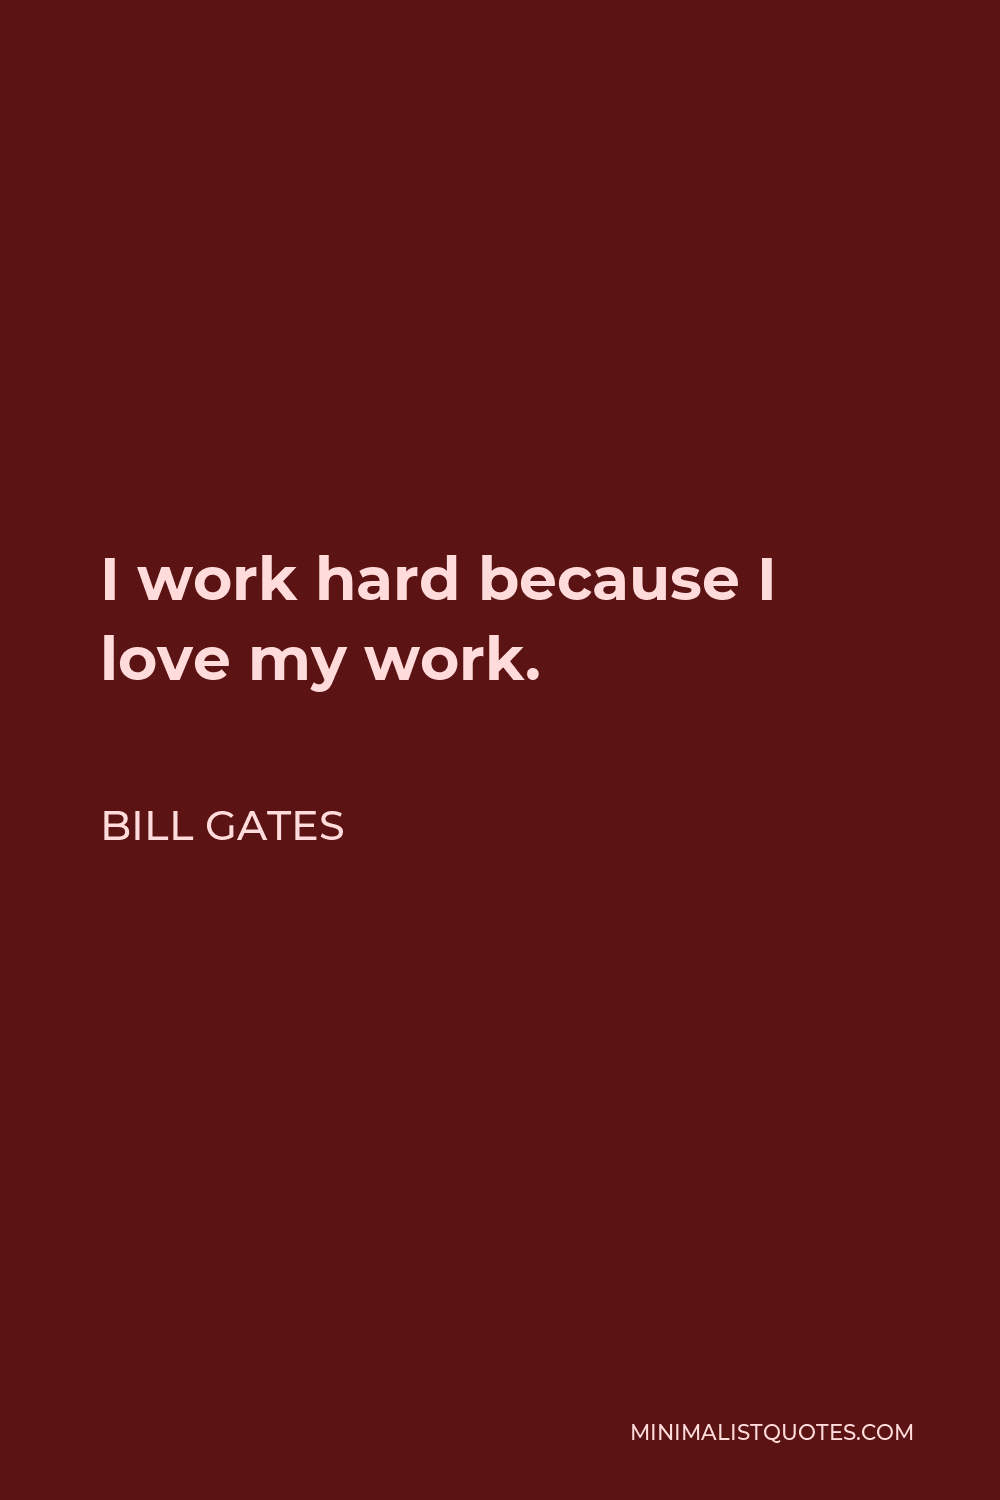 Bill Gates Quote - I work hard because I love my work.